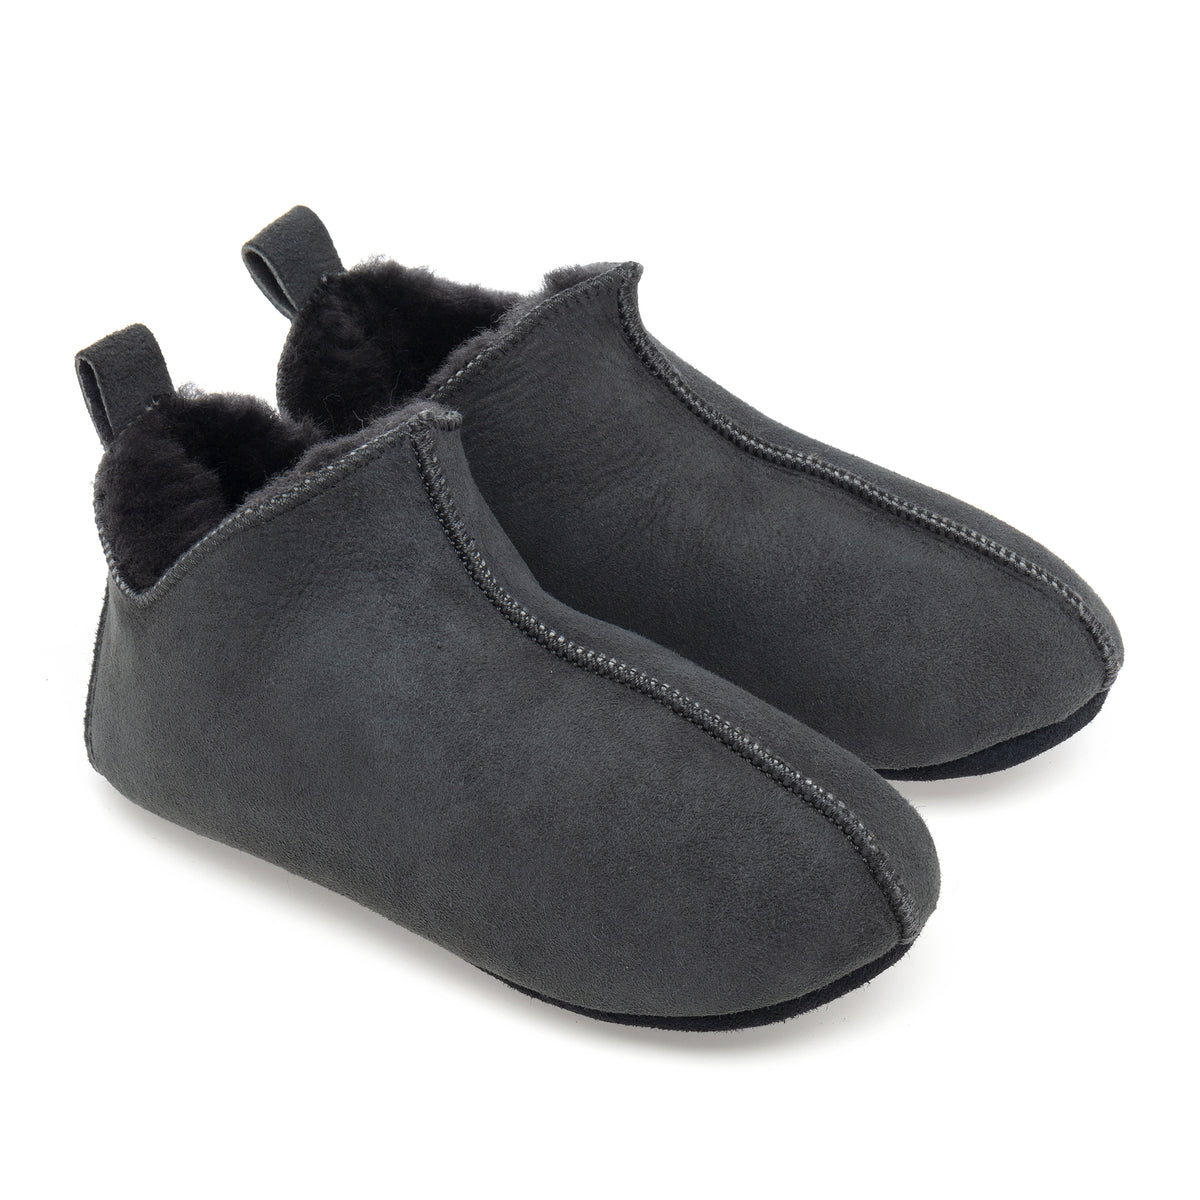 Berit Sheepskin Slippers/Yoga Shoe - Graphite